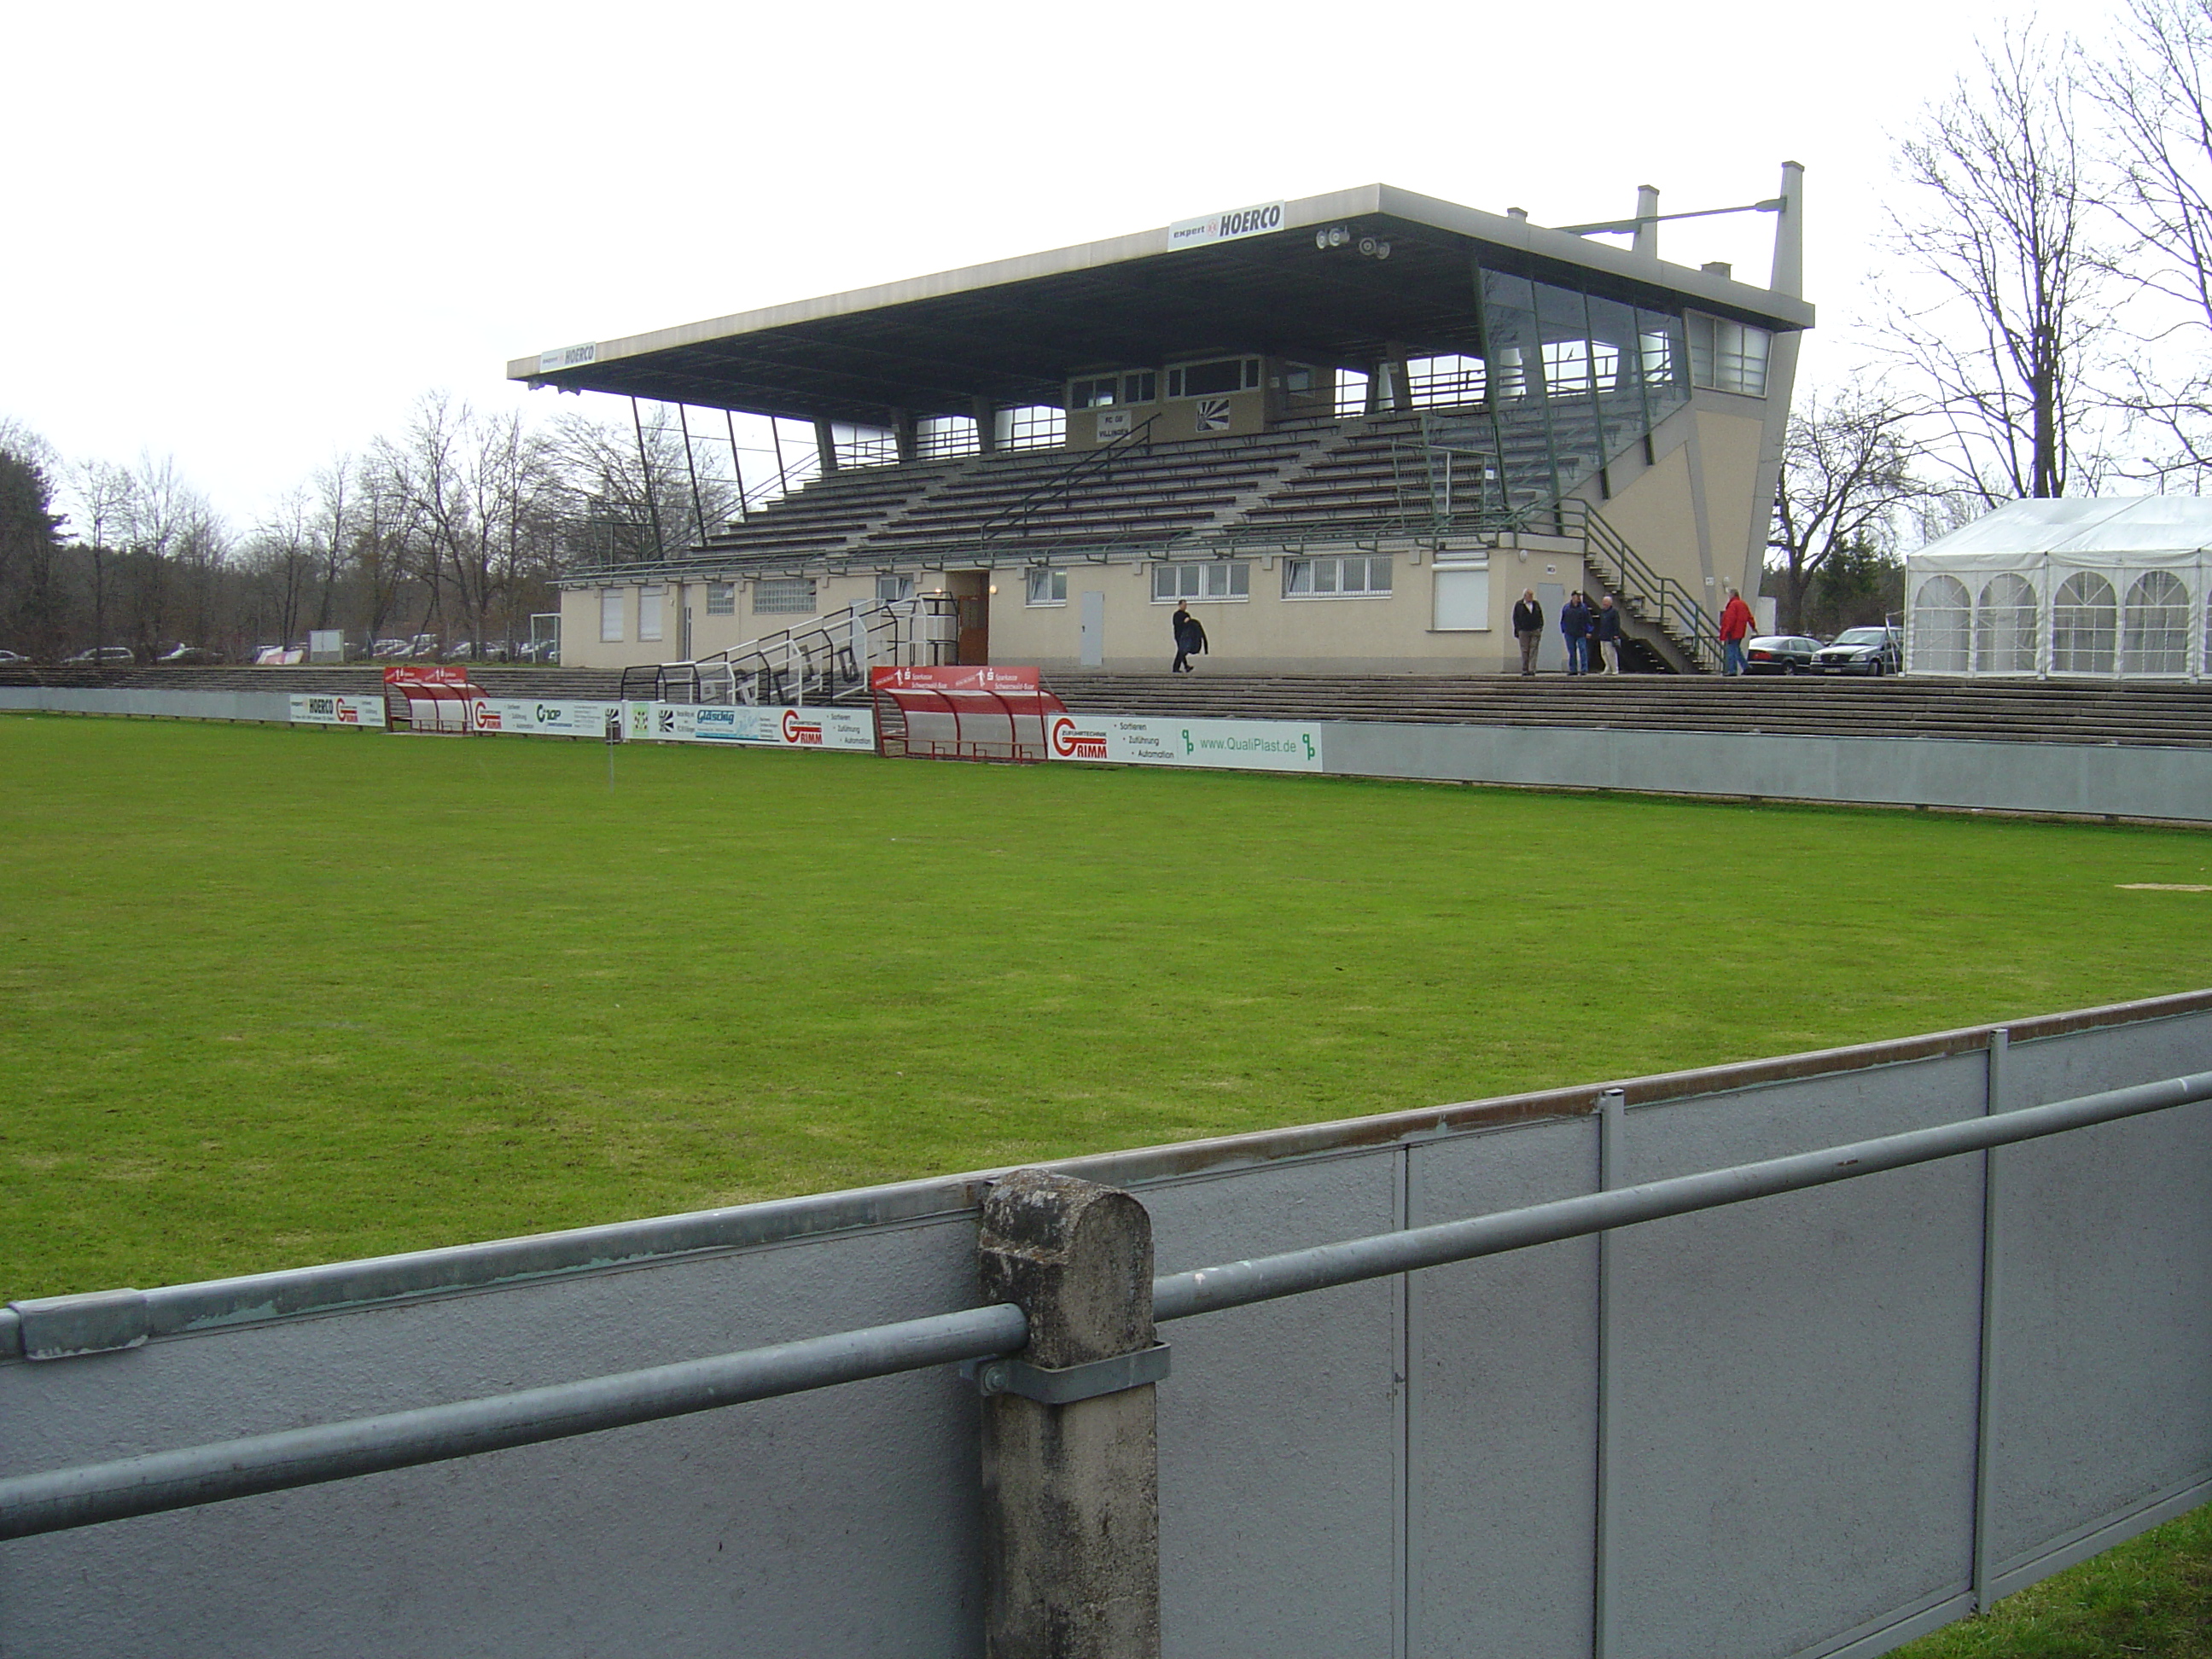 Stadion am Friedengrund, the home of football club FC 08 Villingen - main stand